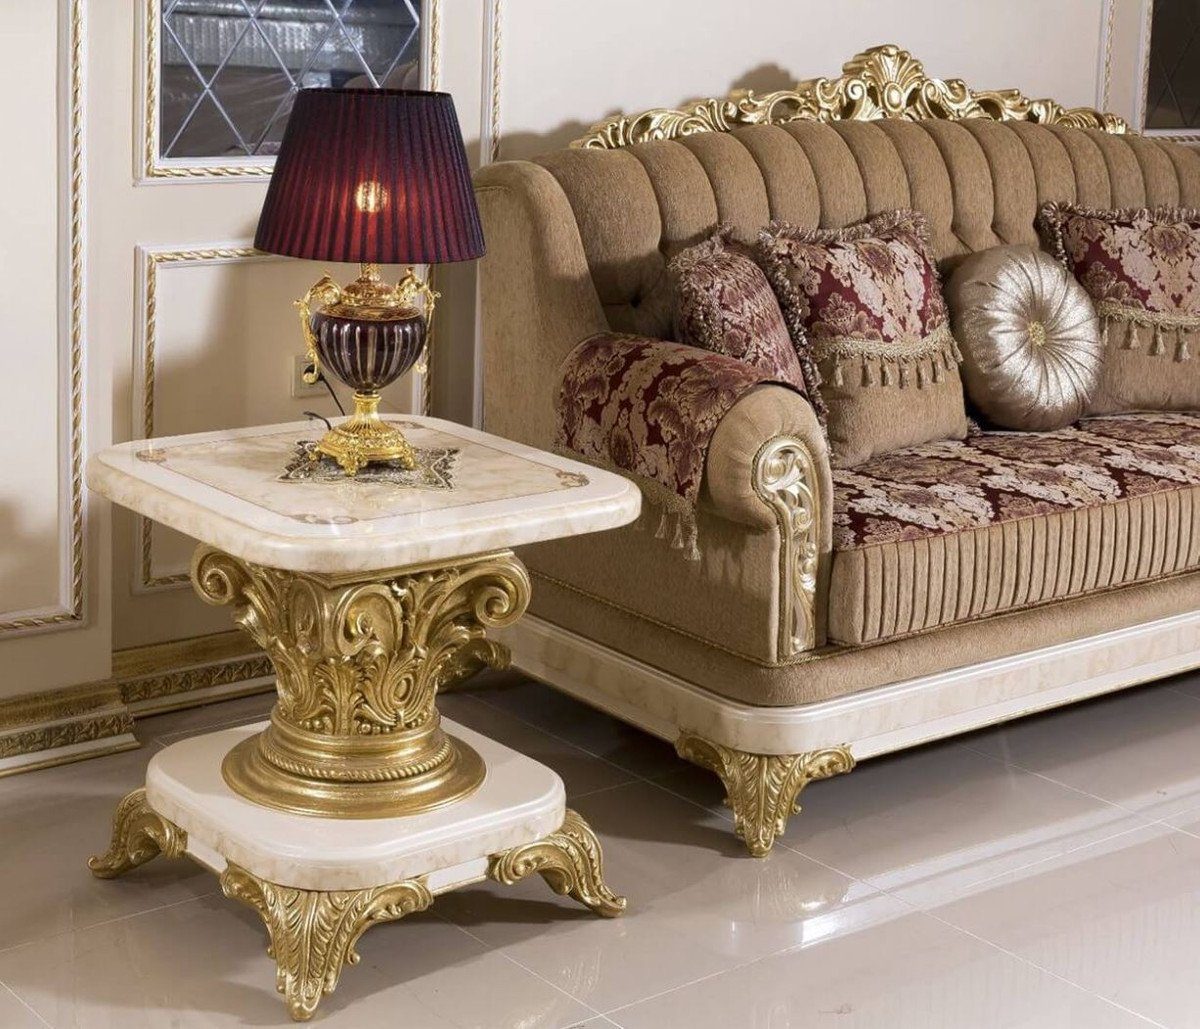 Casa Padrino Sofa Casa Padrino Luxus Barock Sofa Braun / Bordeauxrot / Weiß  / Gold   Prunkvolles Wohnzimmer Sofa mit elegantem Muster   Luxus ...